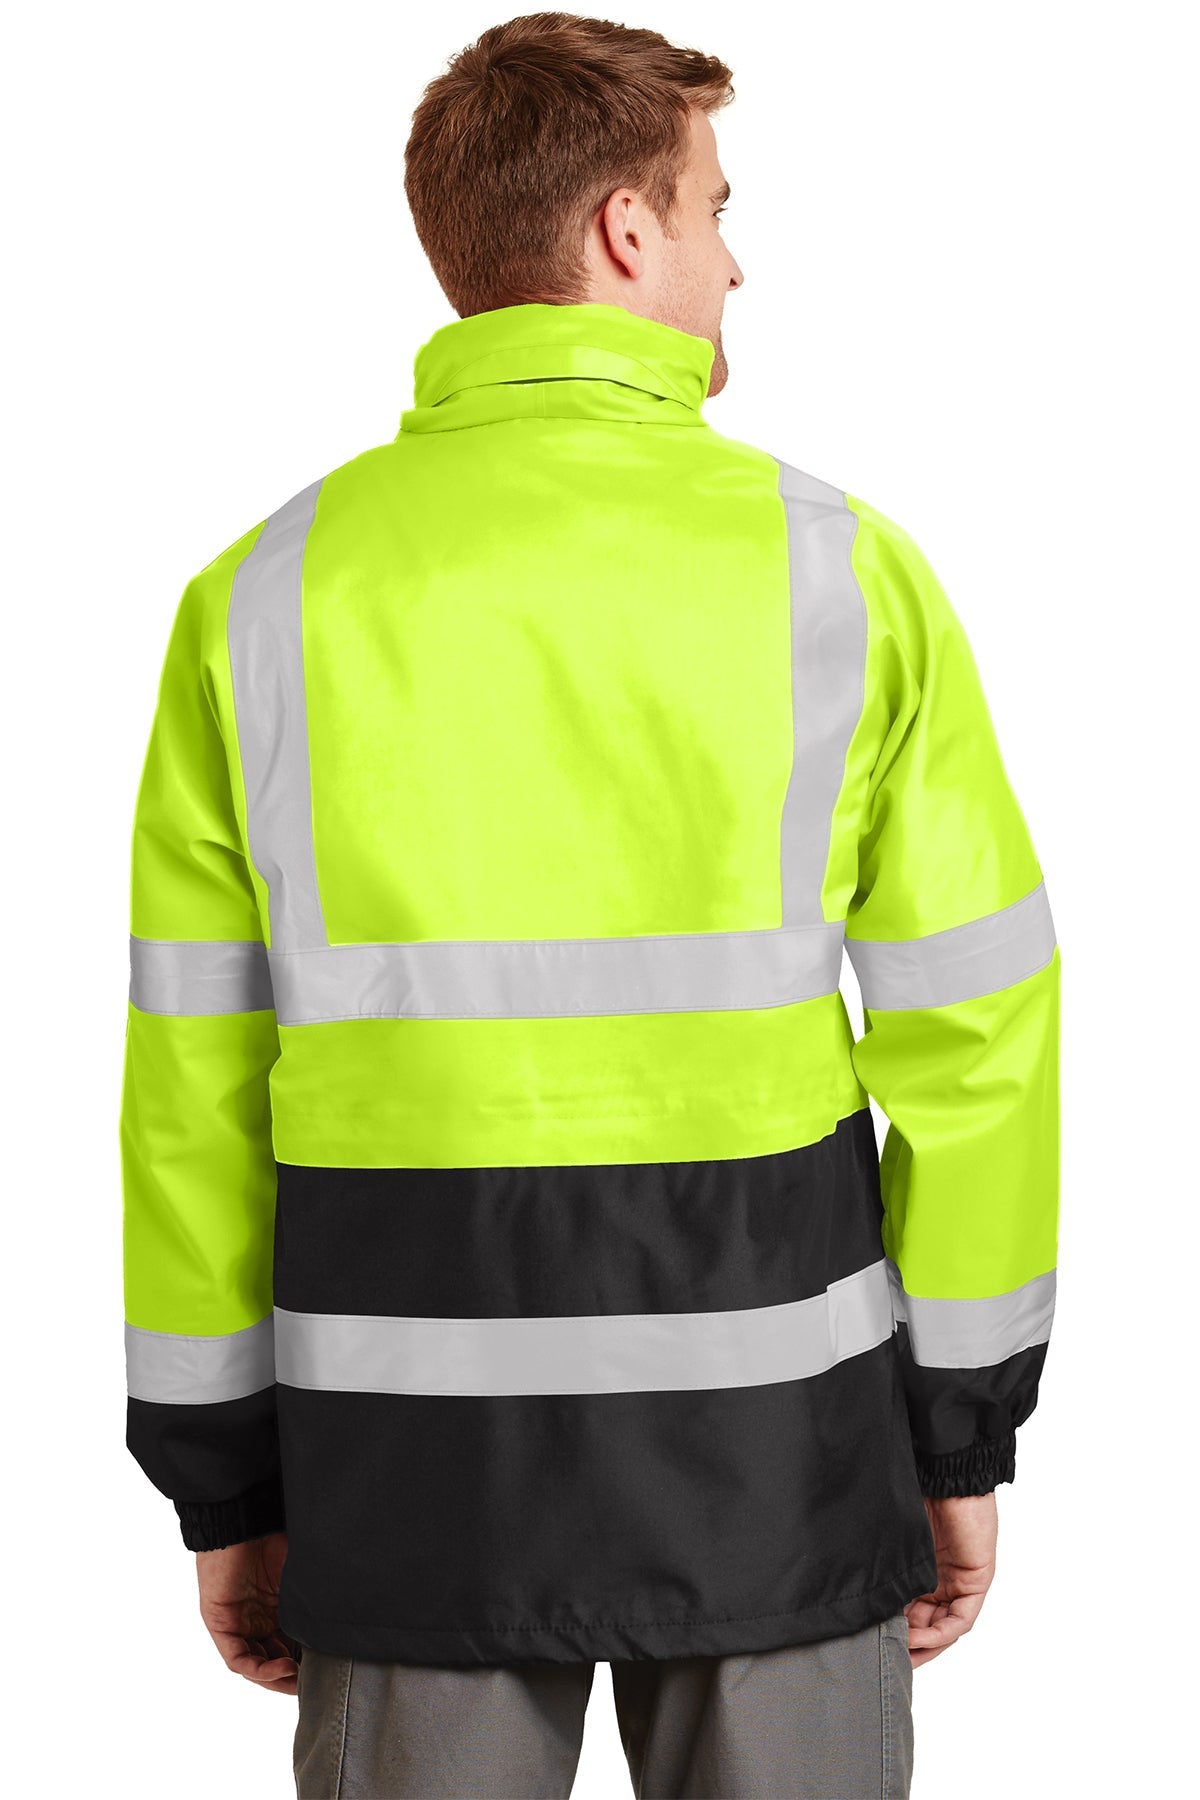 cornerstone_csj24 _safety yellow/ black_company_logo_jackets